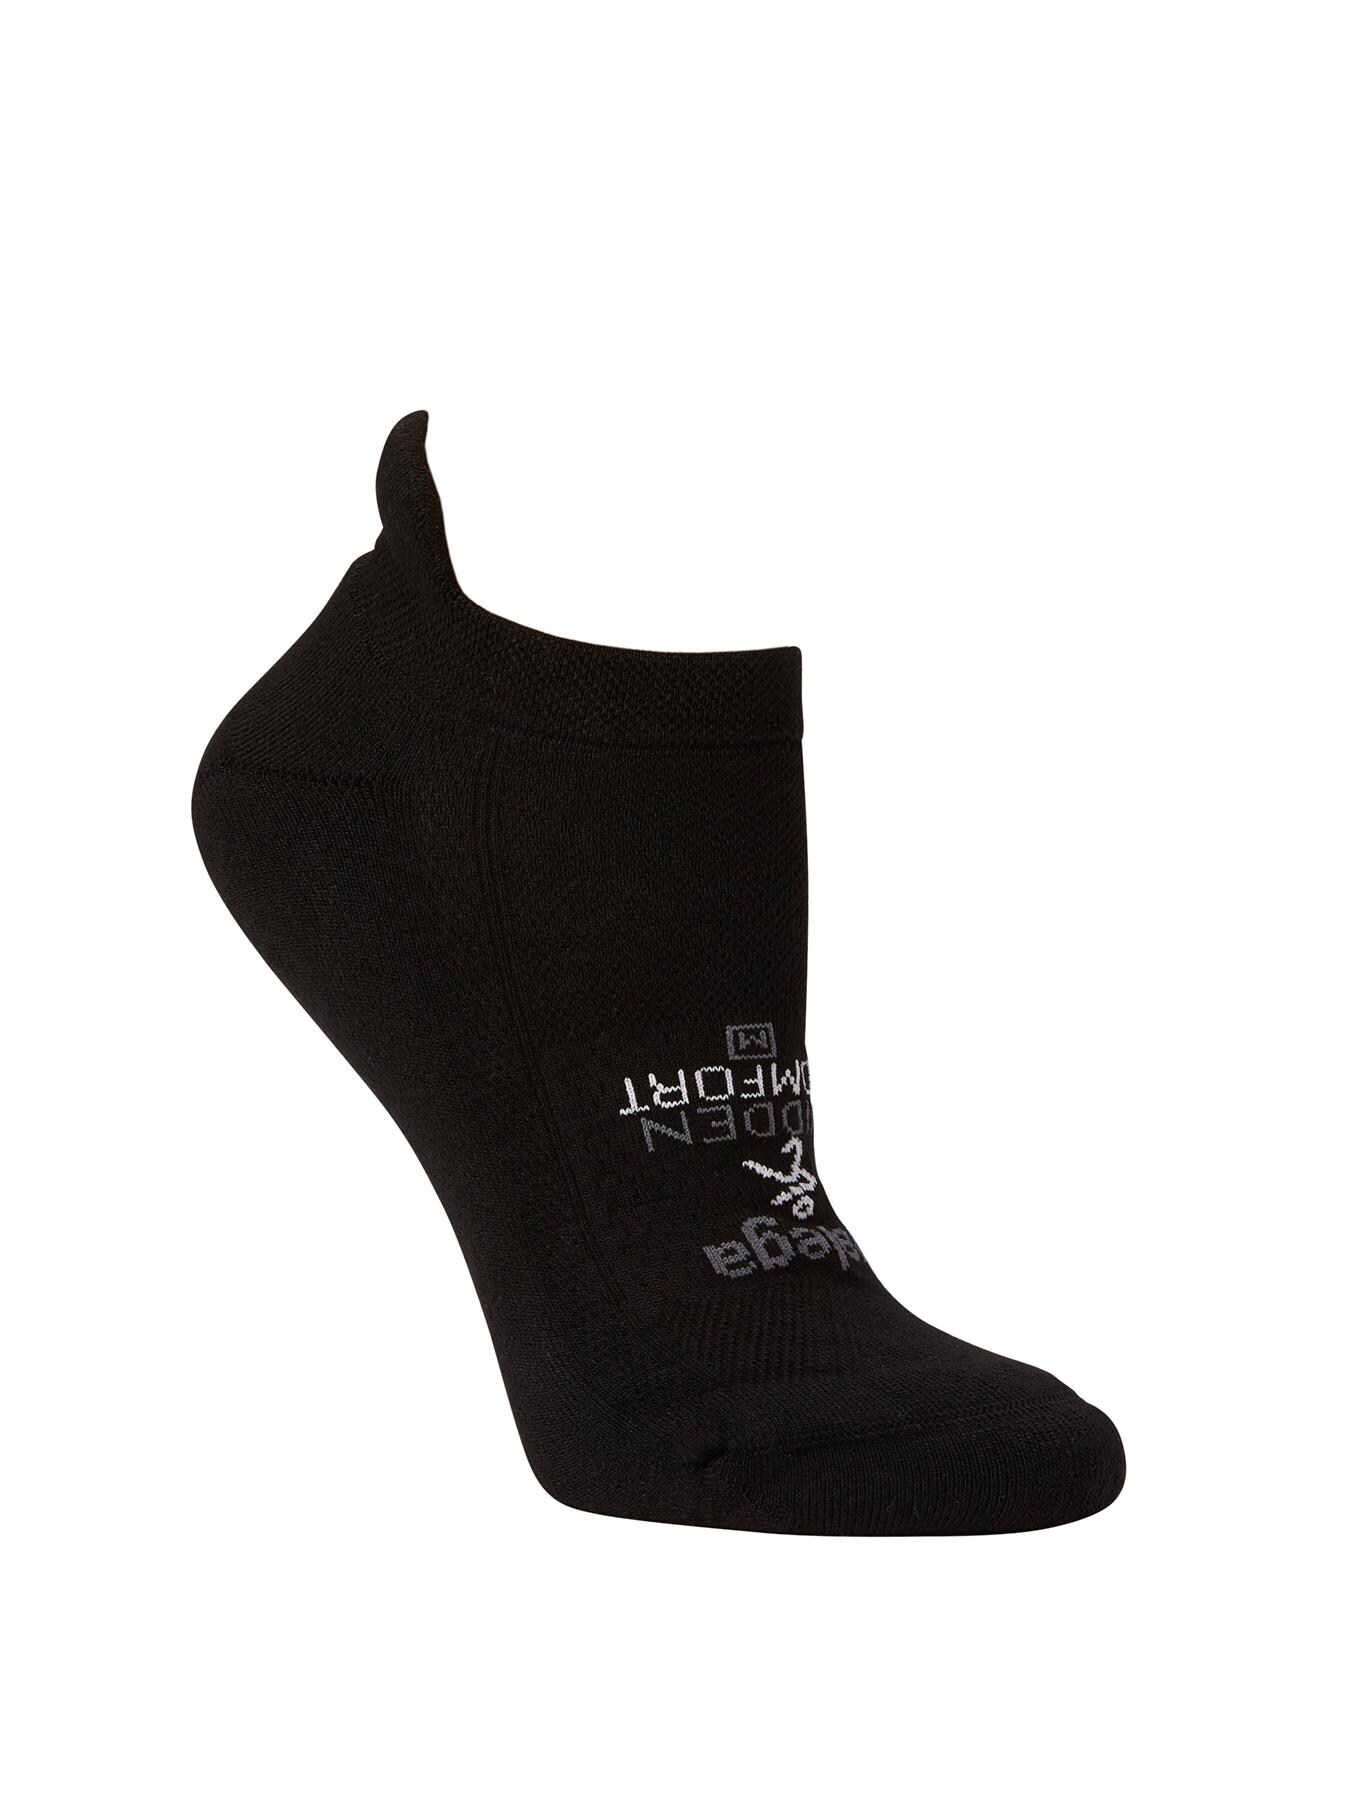 Hidden Comfort Socks by Balega® | Athleta